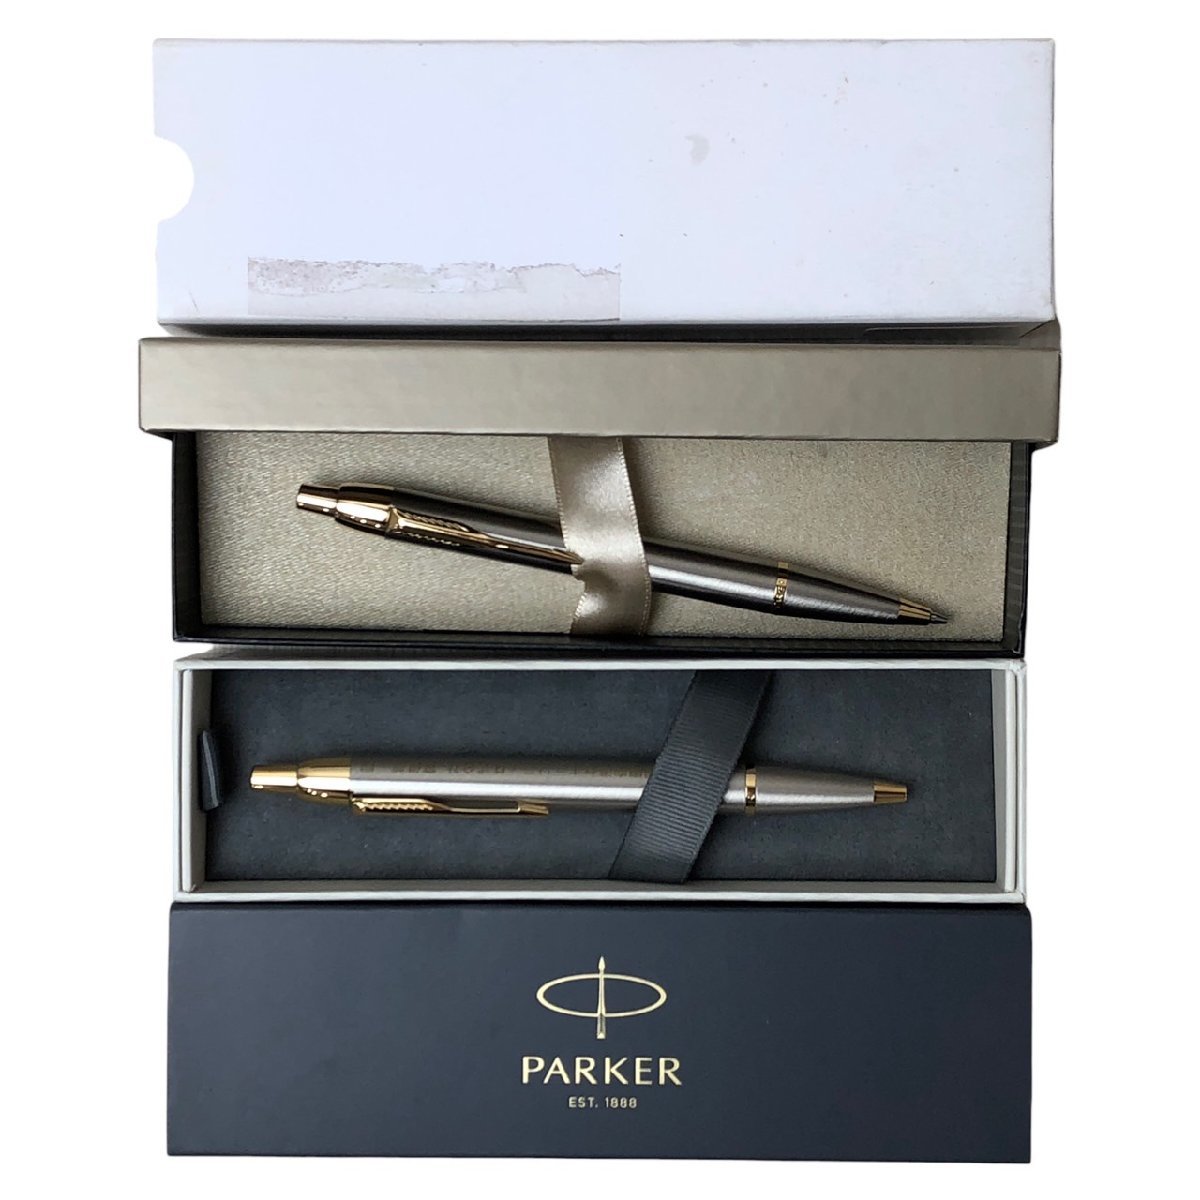 USED PARKER パーカー シルバー ゴールド ブラック ボールペン シャープペンシル シャーペン 回転式 ノック式 ペン 事務 筆記 セット 箱付_PARKER ボールペン シャープペンシル